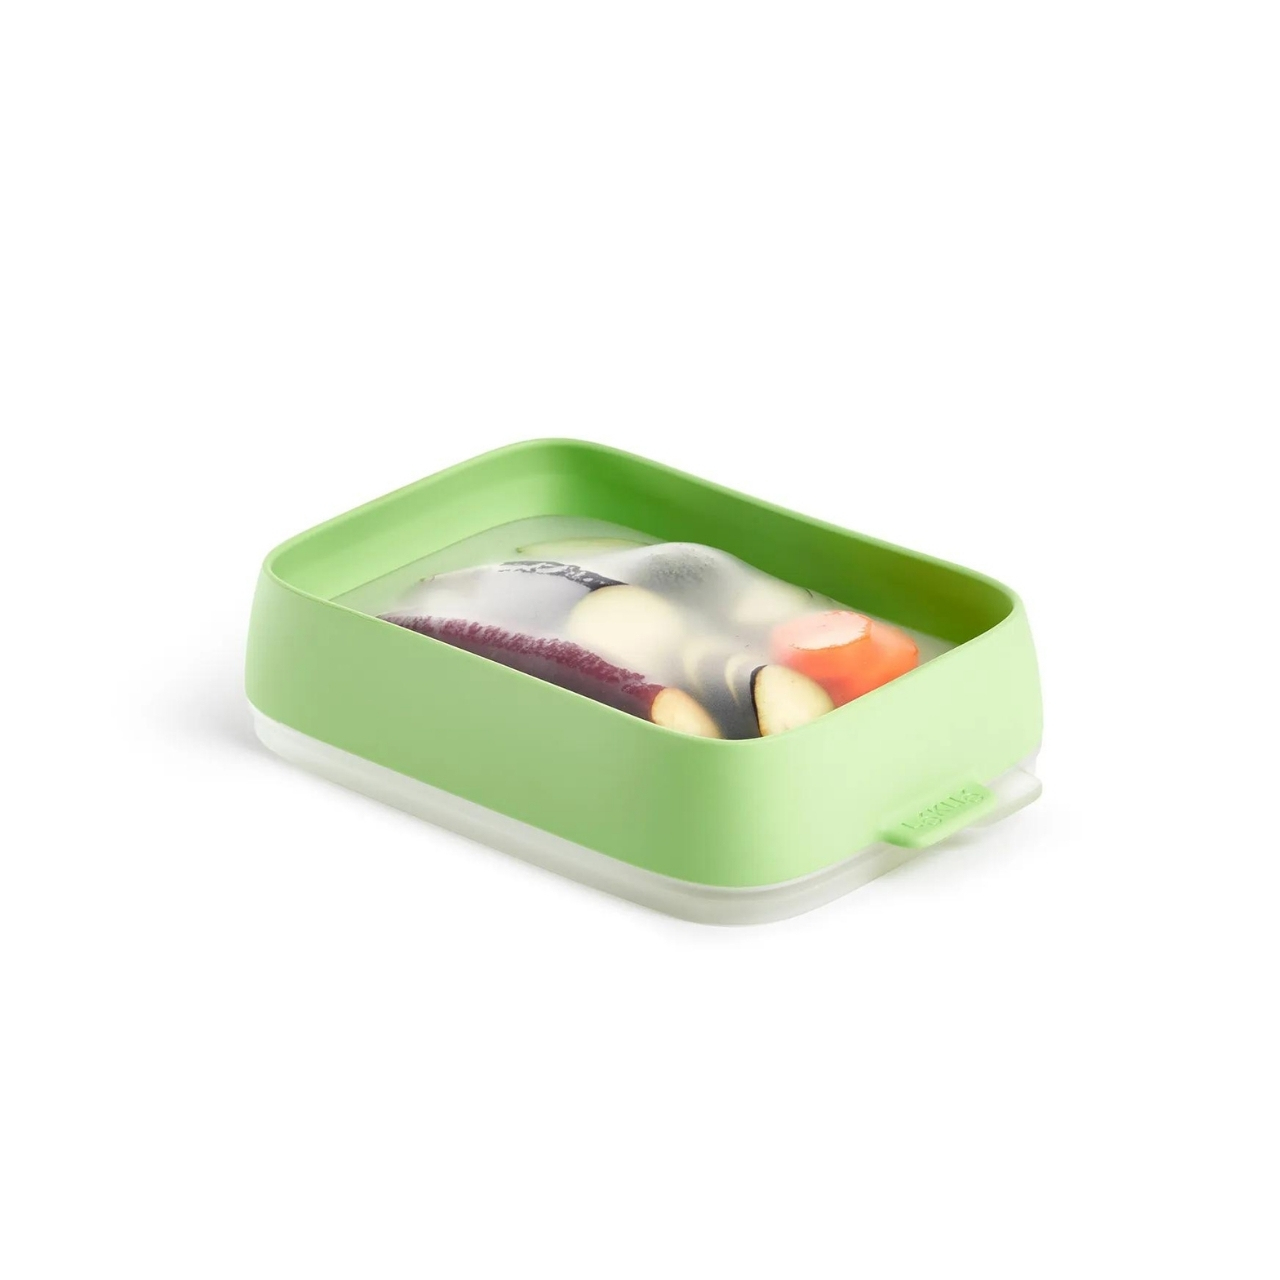 https://www.yankodesign.com/images/design_news/2022/07/reusable-seal-tray-helps-keep-veggies-fresh-and-reduce-single-use-plastic/1.jpg